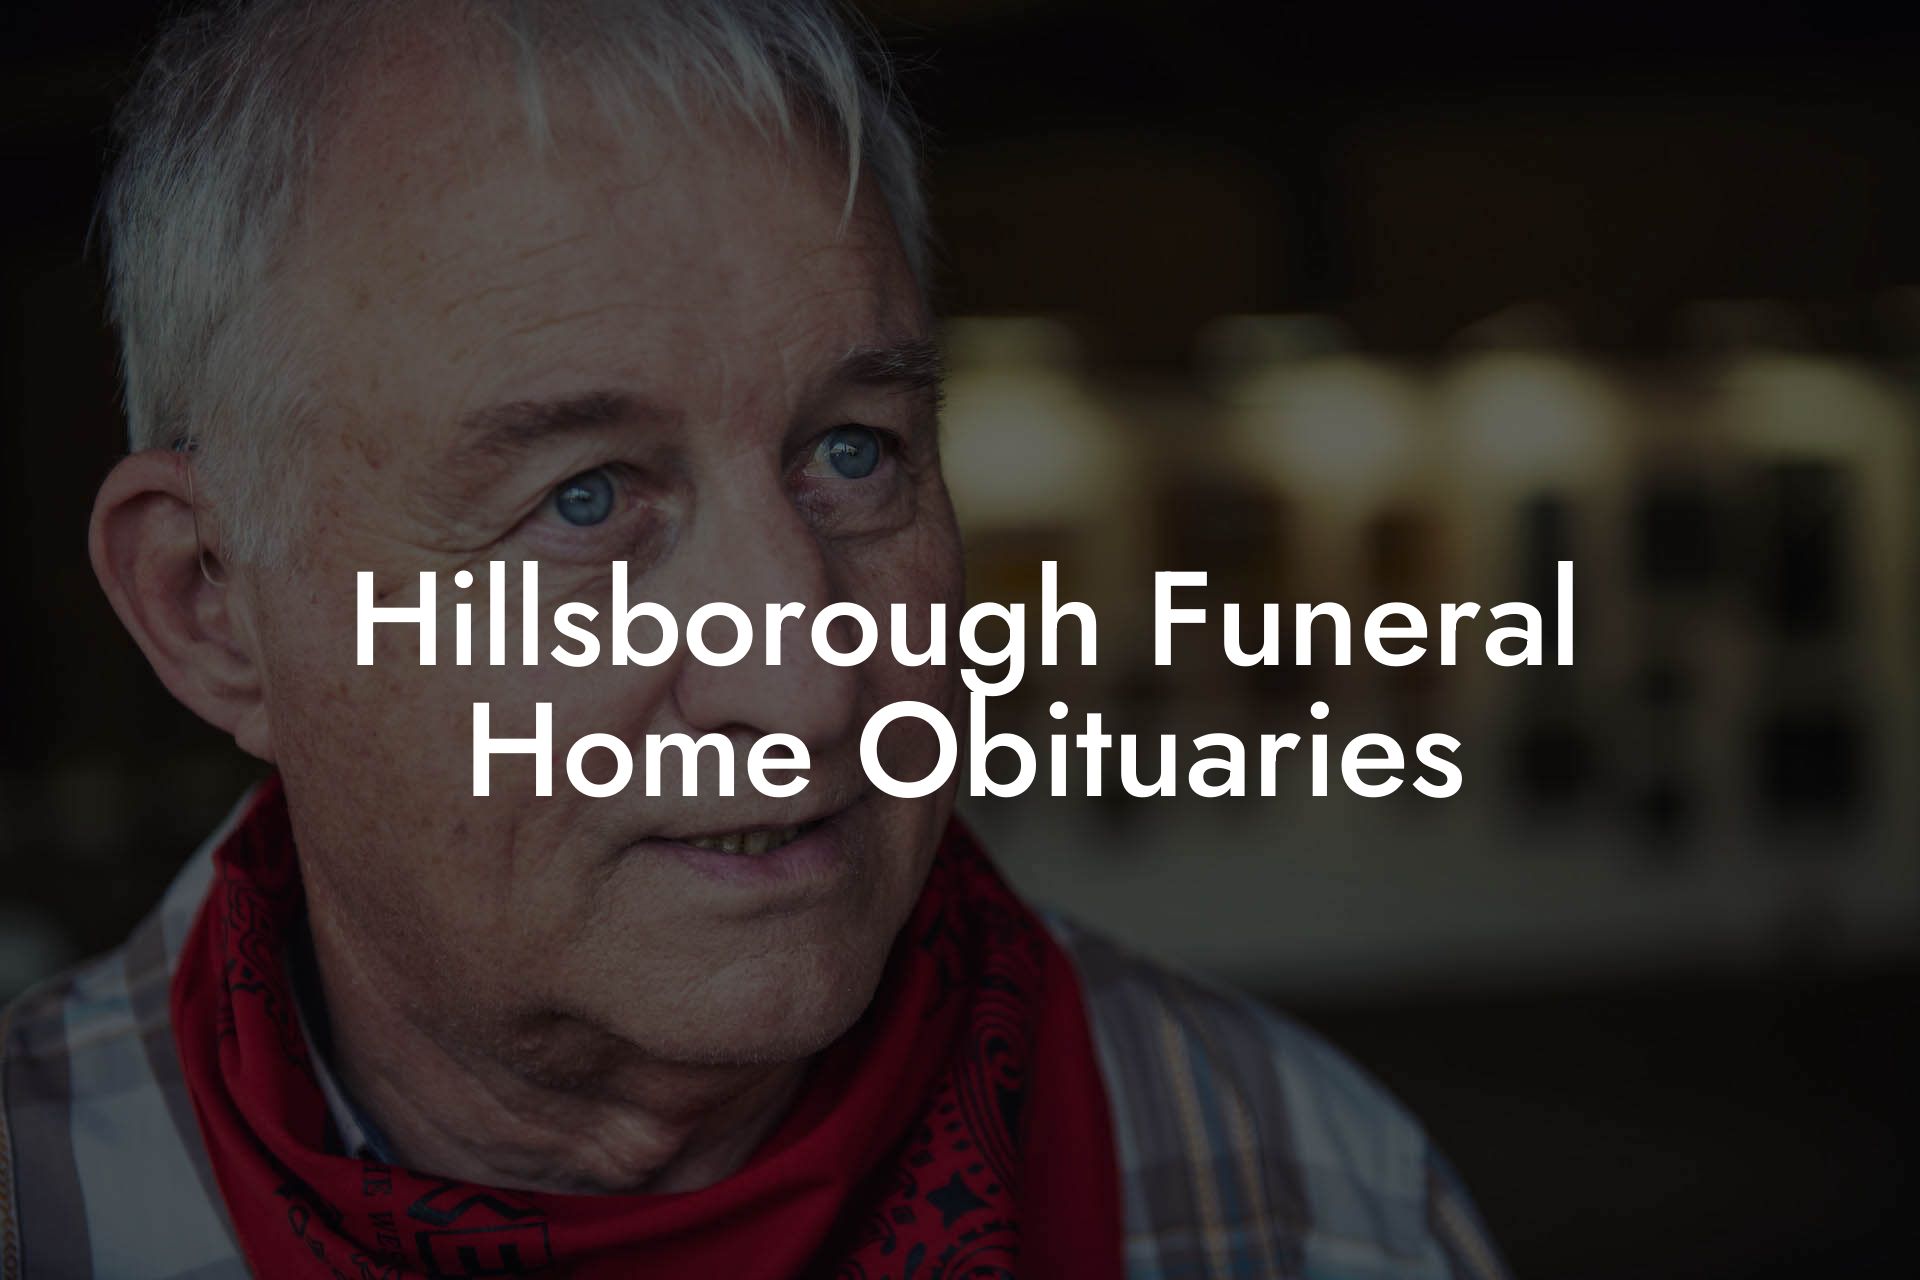 Hillsborough Funeral Home Obituaries